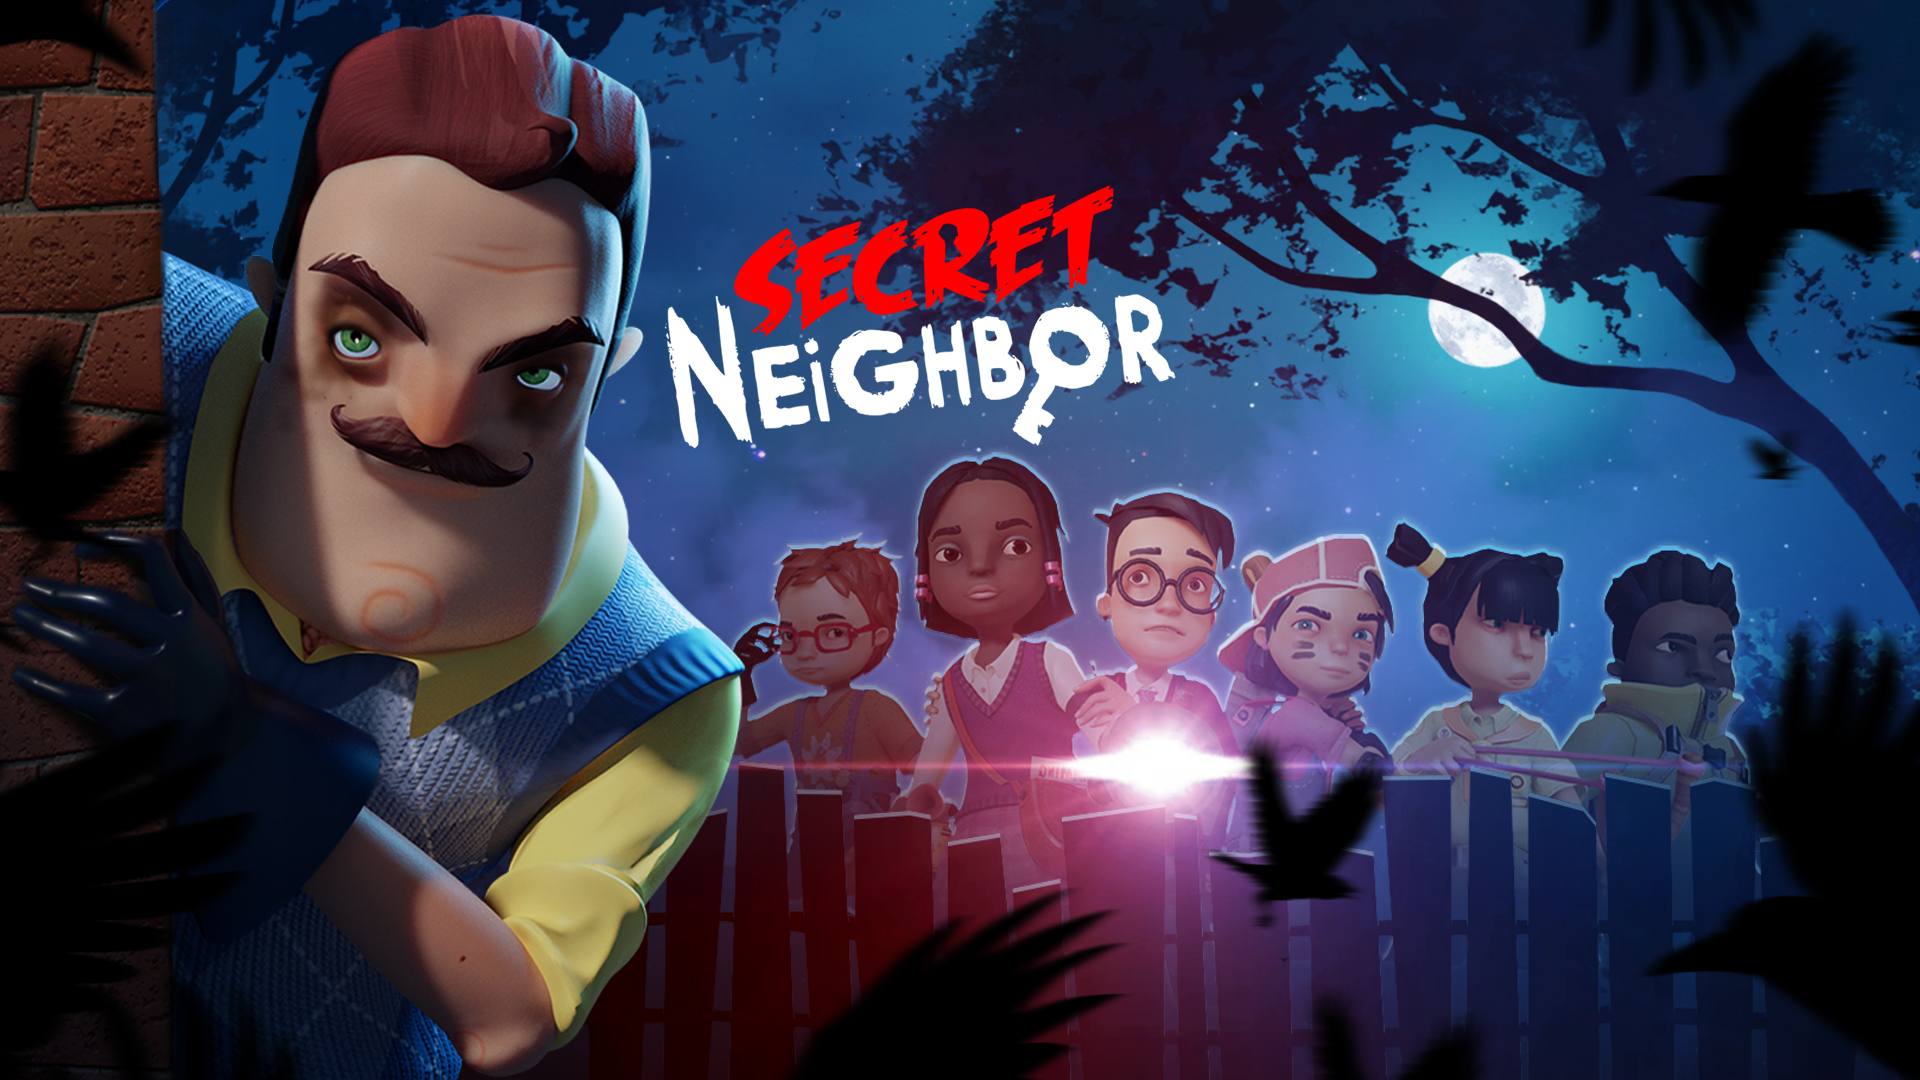 Secret Neighbor Reviews, Pricing, Free Download